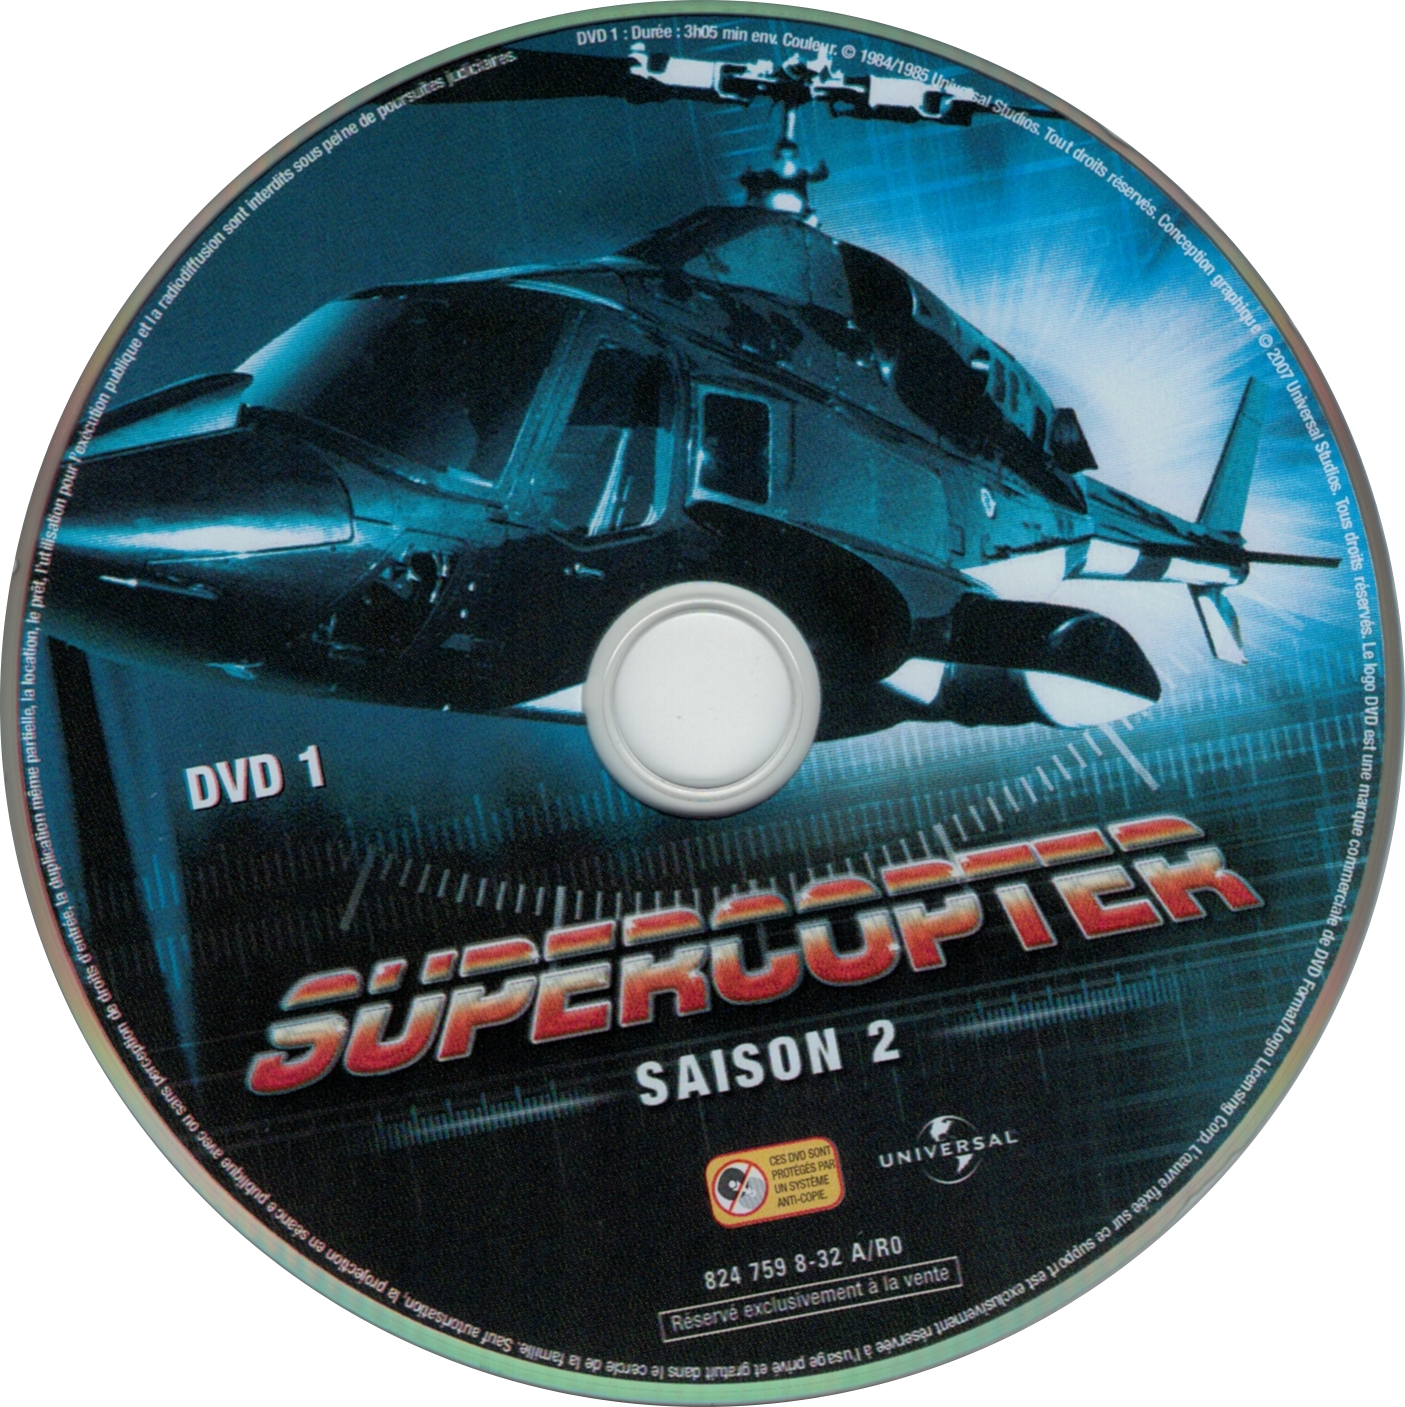 Supercopter Saison 2 DVD 1